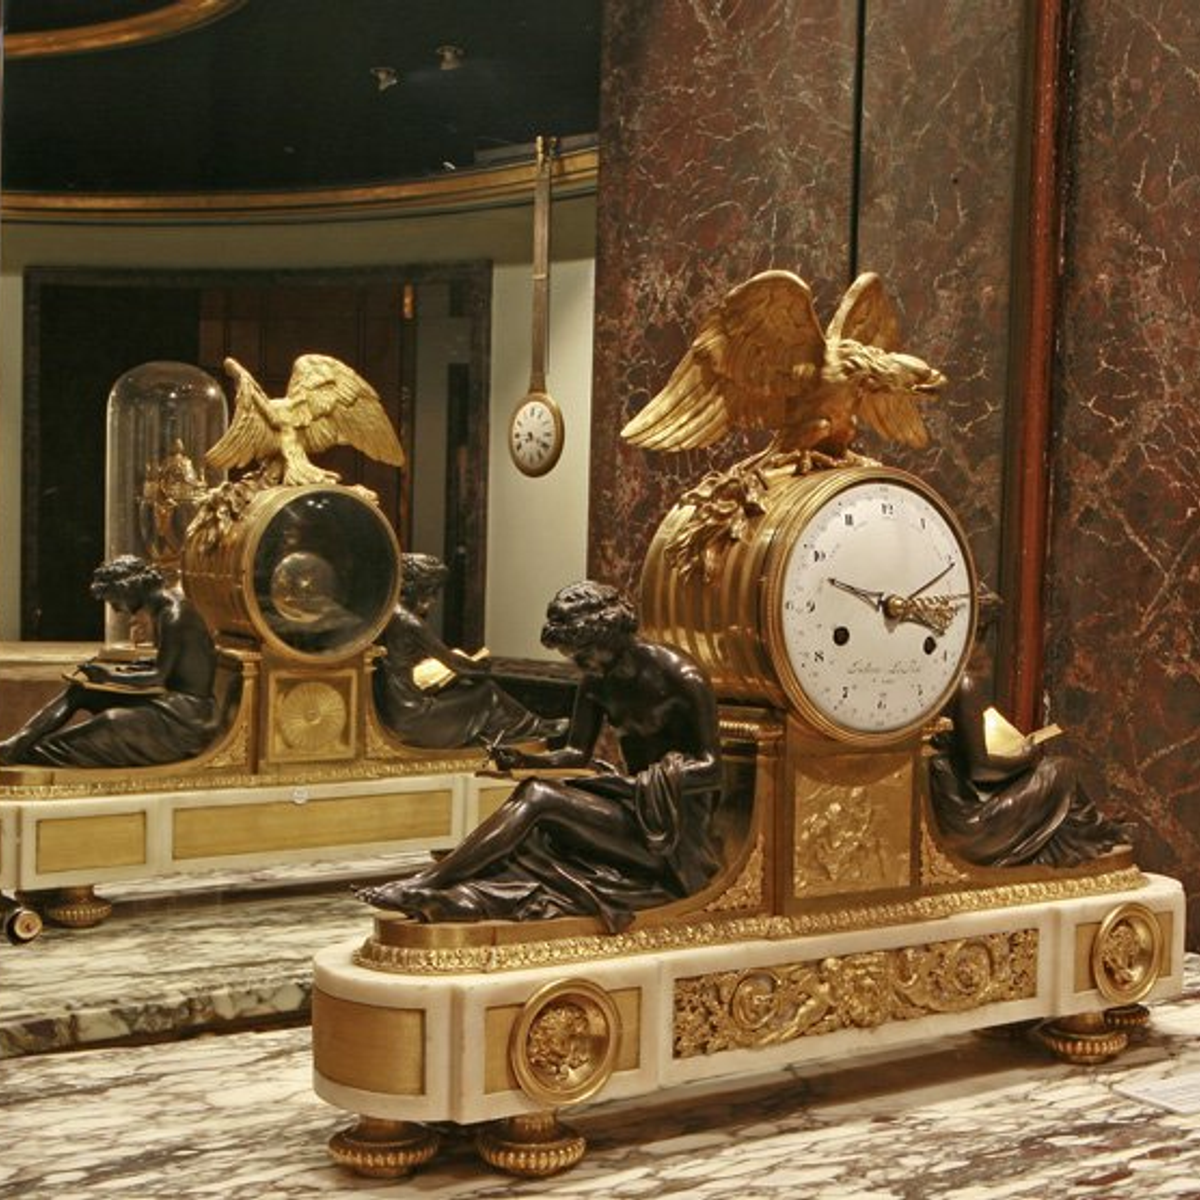 Musée d'horlogerie de Grassy